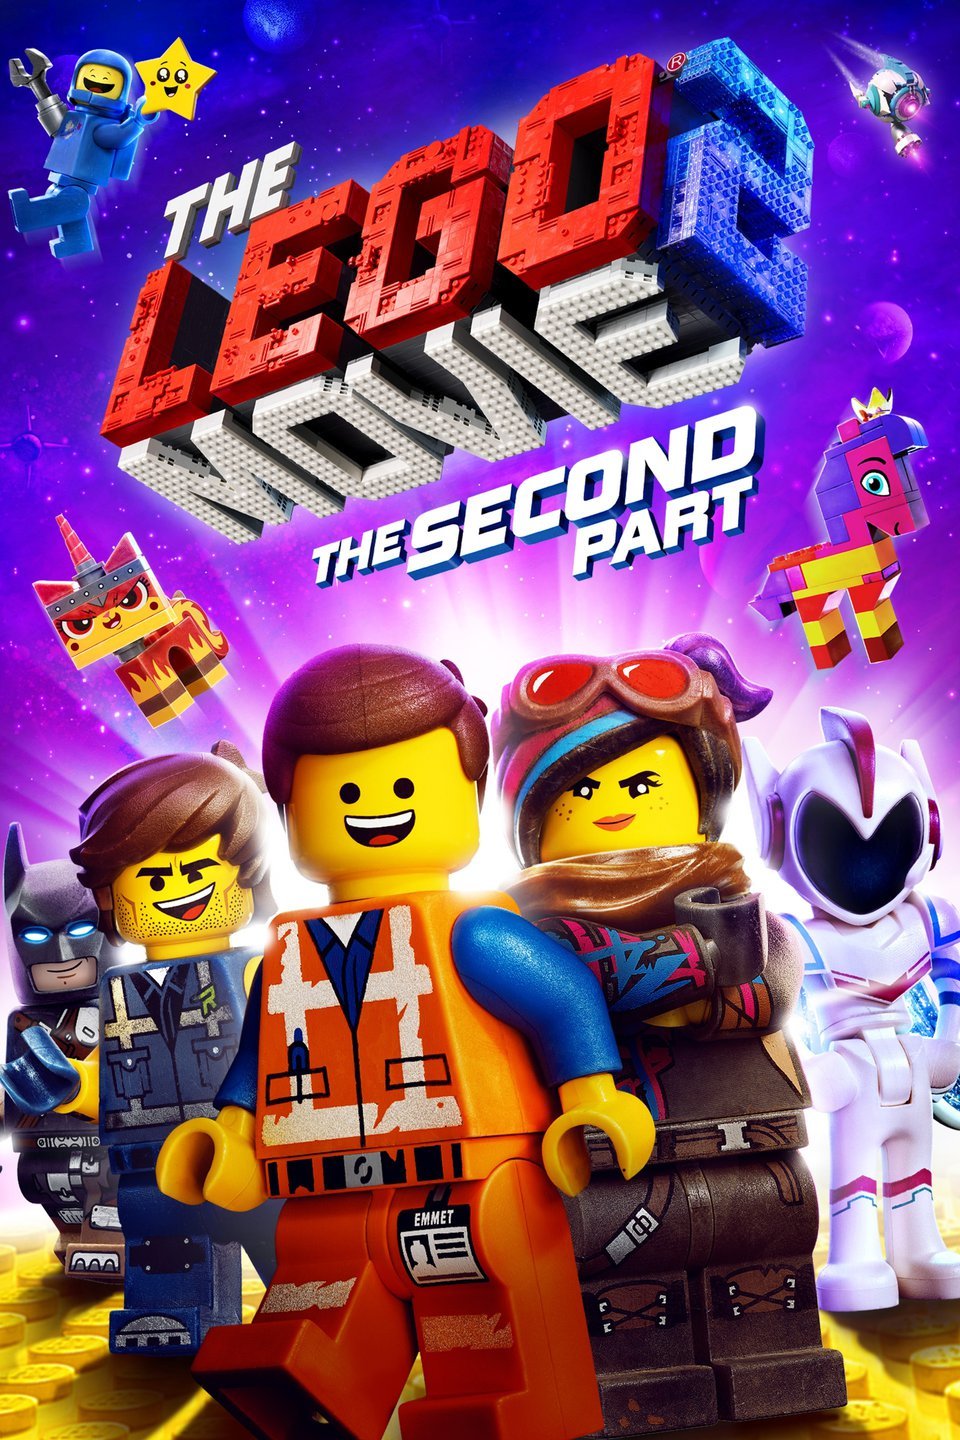 [MINI Super-HQ] The Lego Movie 2: The Second Part (2019) เดอะ เลโก้ มูฟวี่ 2 [1080p] [พากย์ไทย 5.1 + เสียงอังกฤษ DTS] [บรรยายไทย + อังกฤษ] [เสียงไทย + ซับไทย] [OPENLOAD]